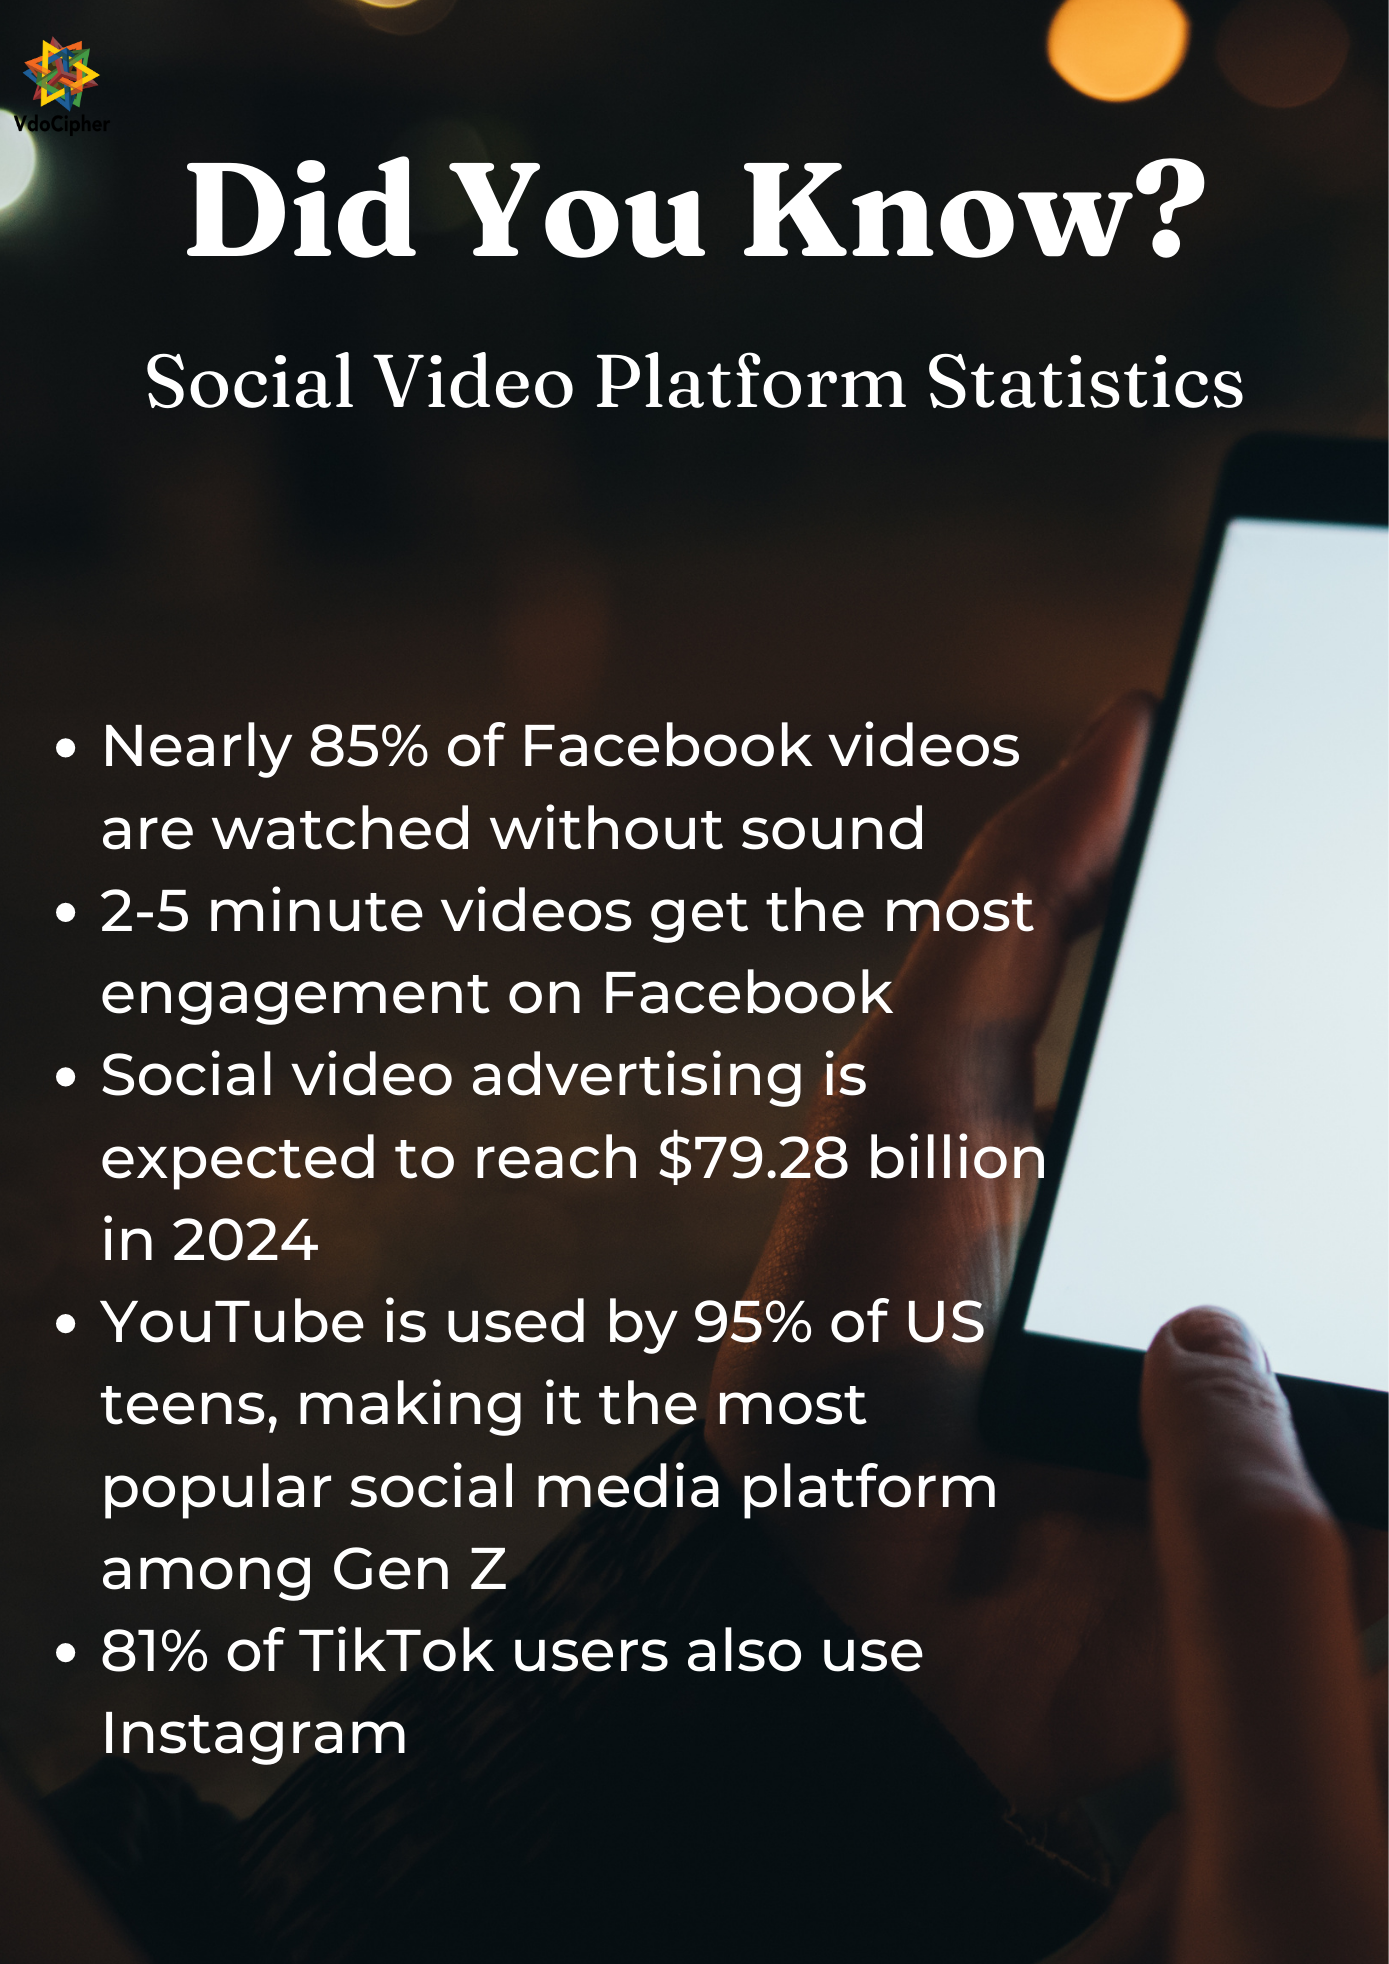 social video platform statistics in form of text